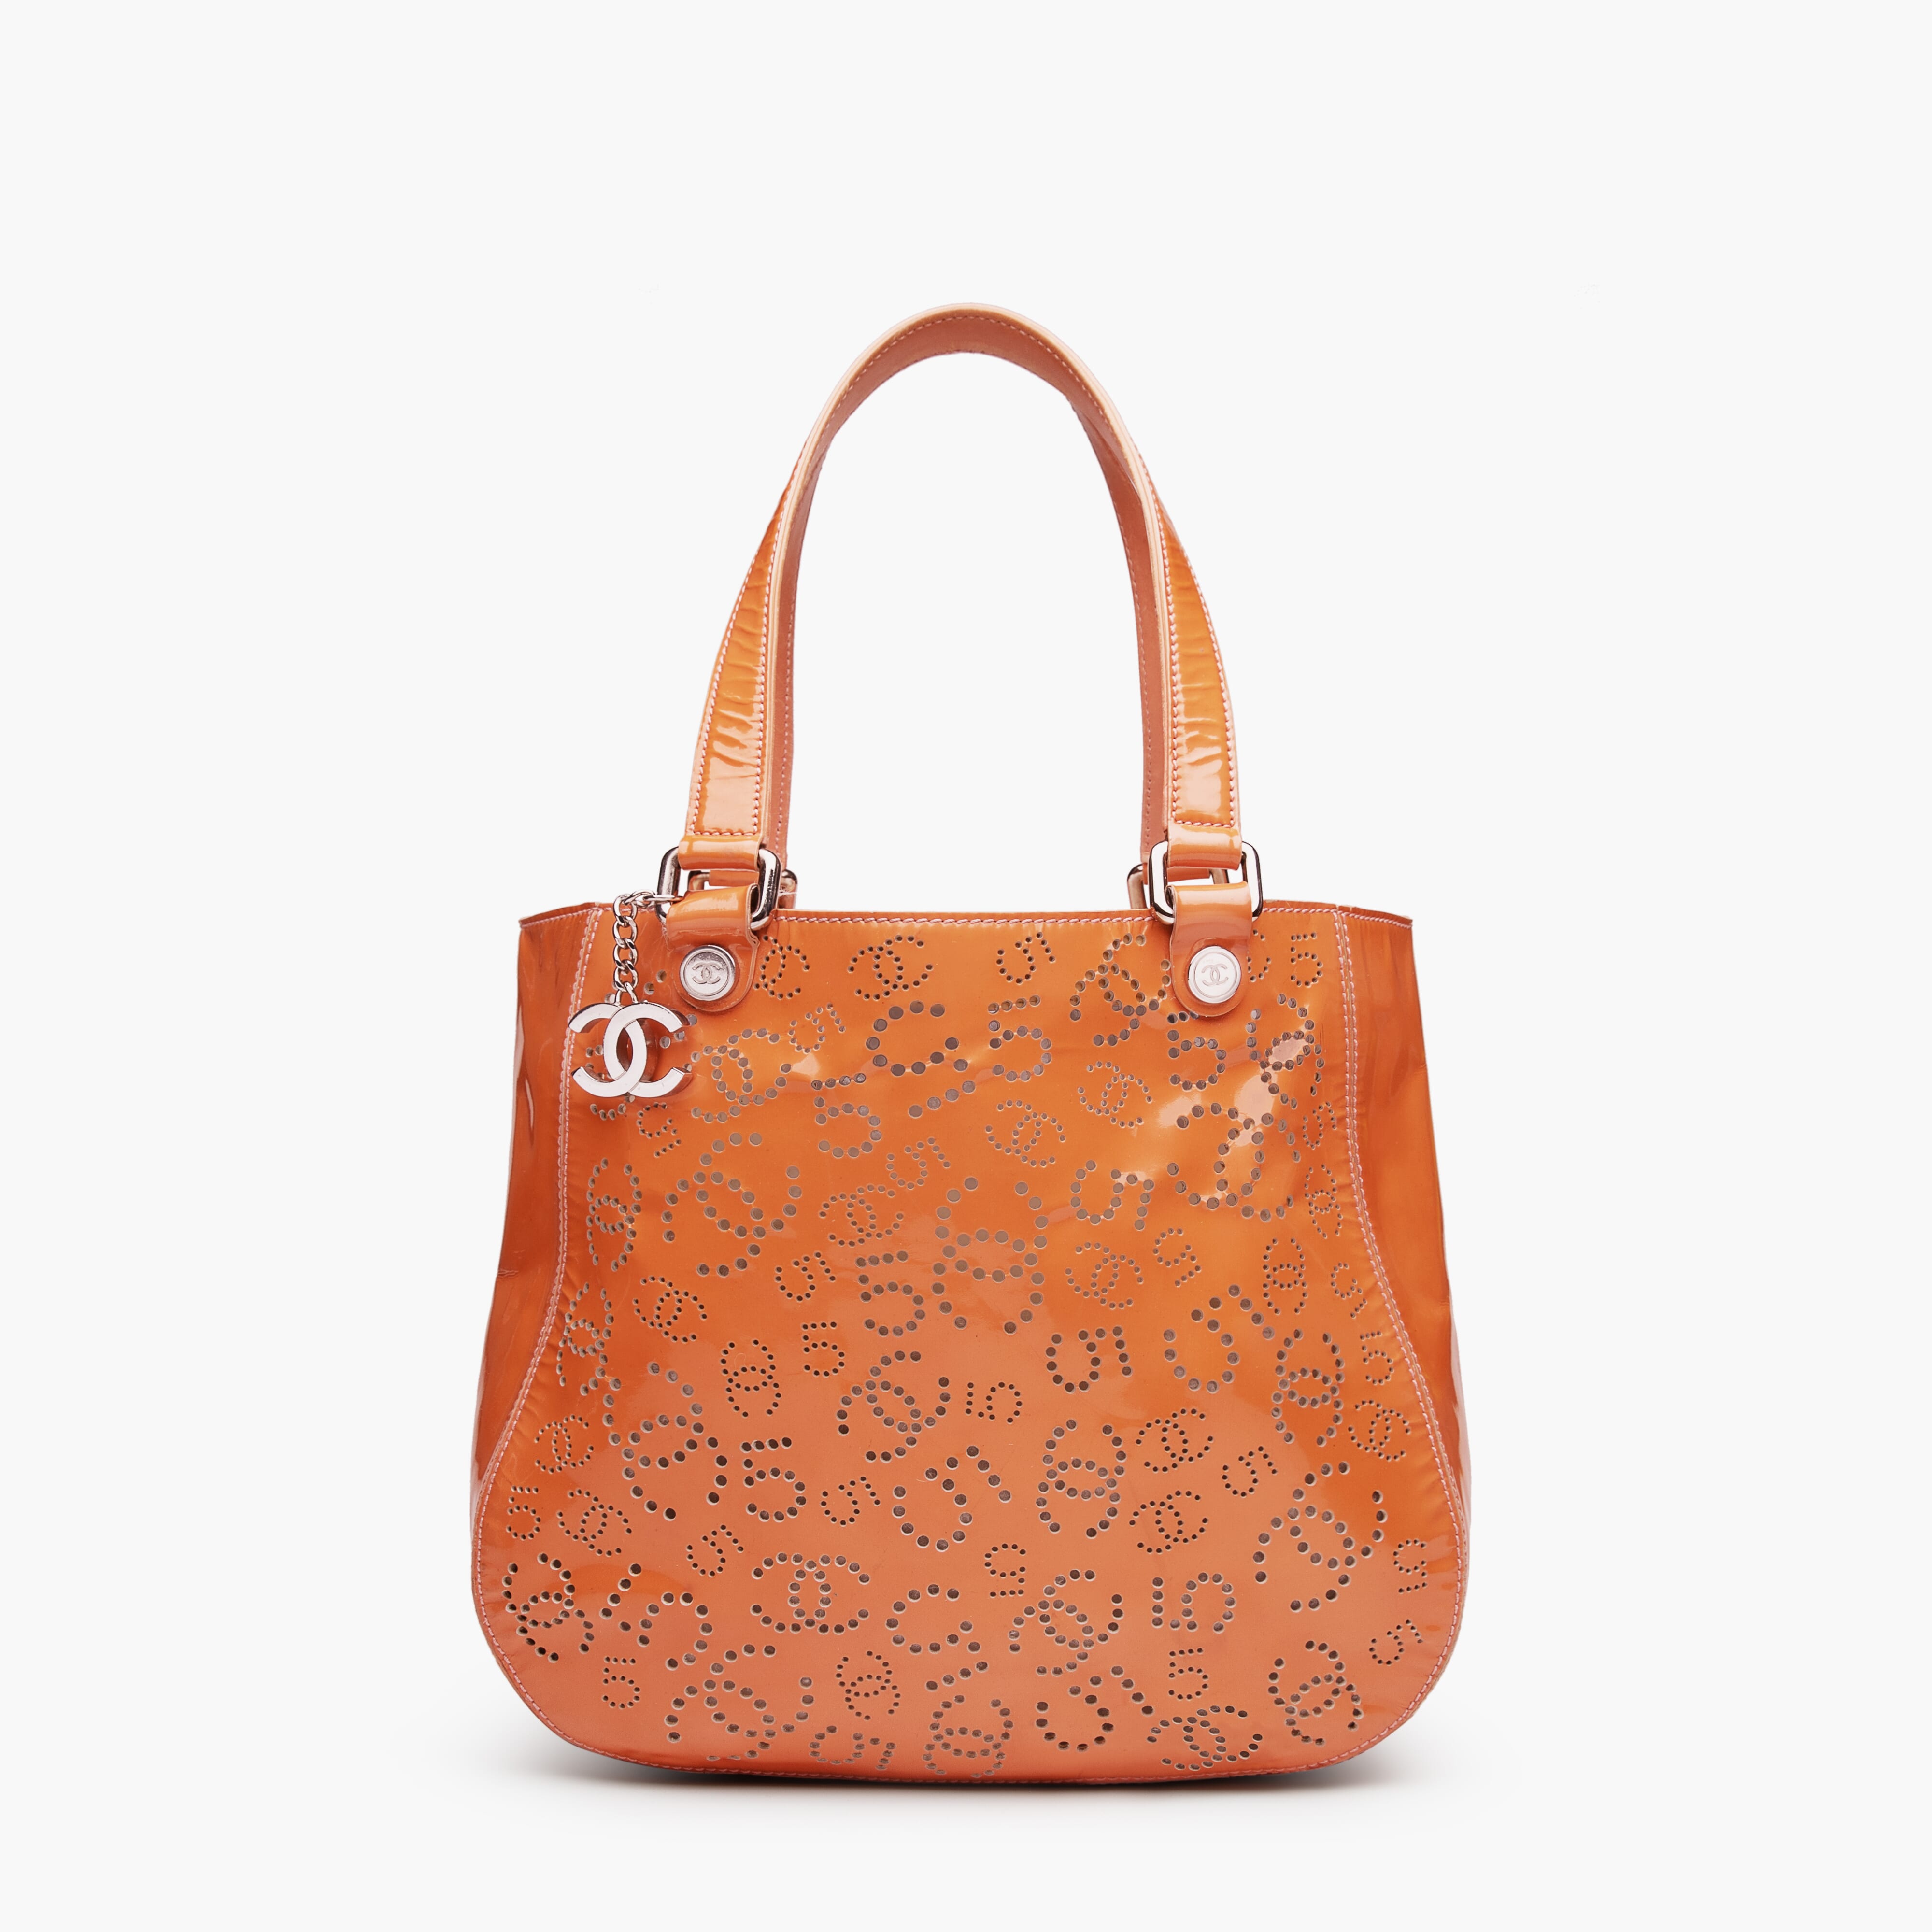 Chanel Orange Perforated CC Patent Tote Bag